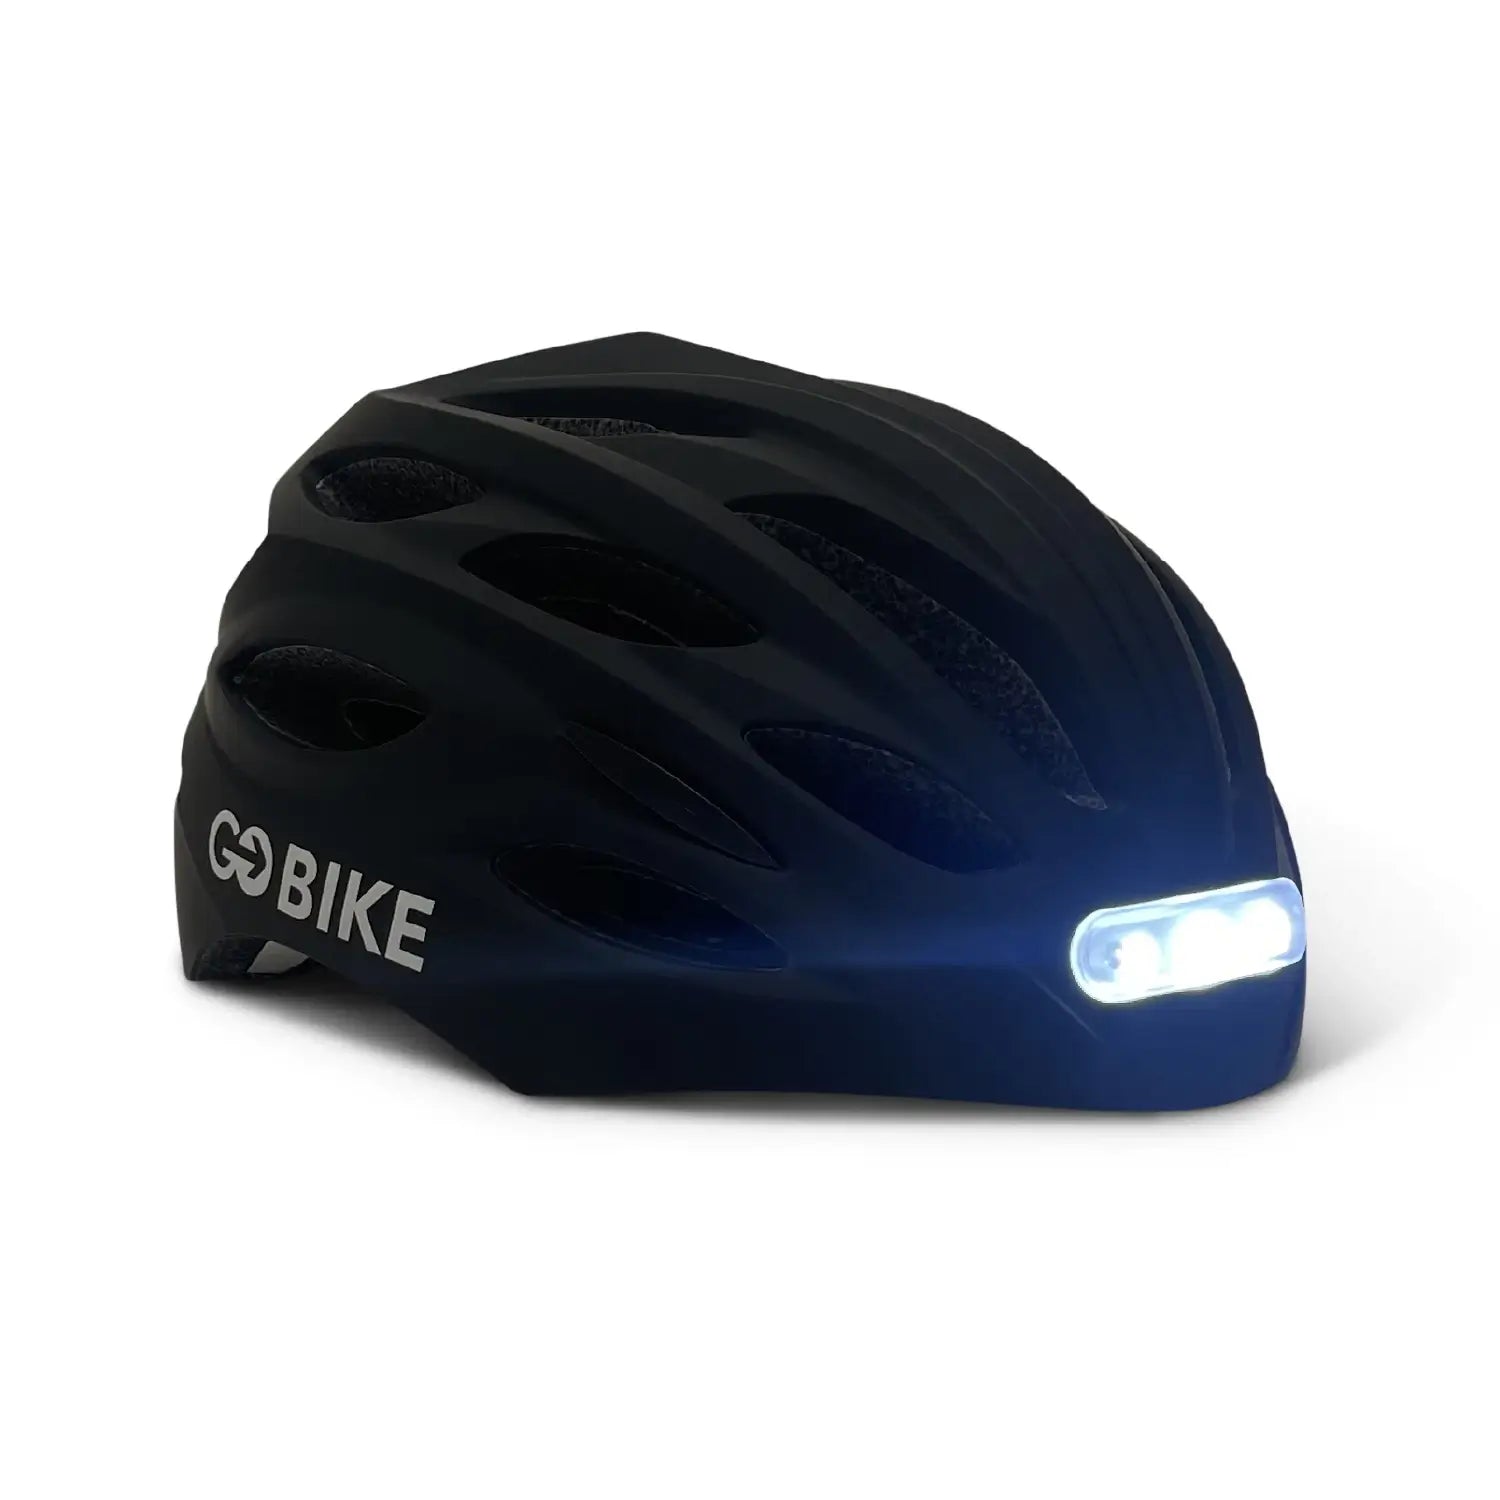 GOBIKE Helmet With Safety Warning Light_1